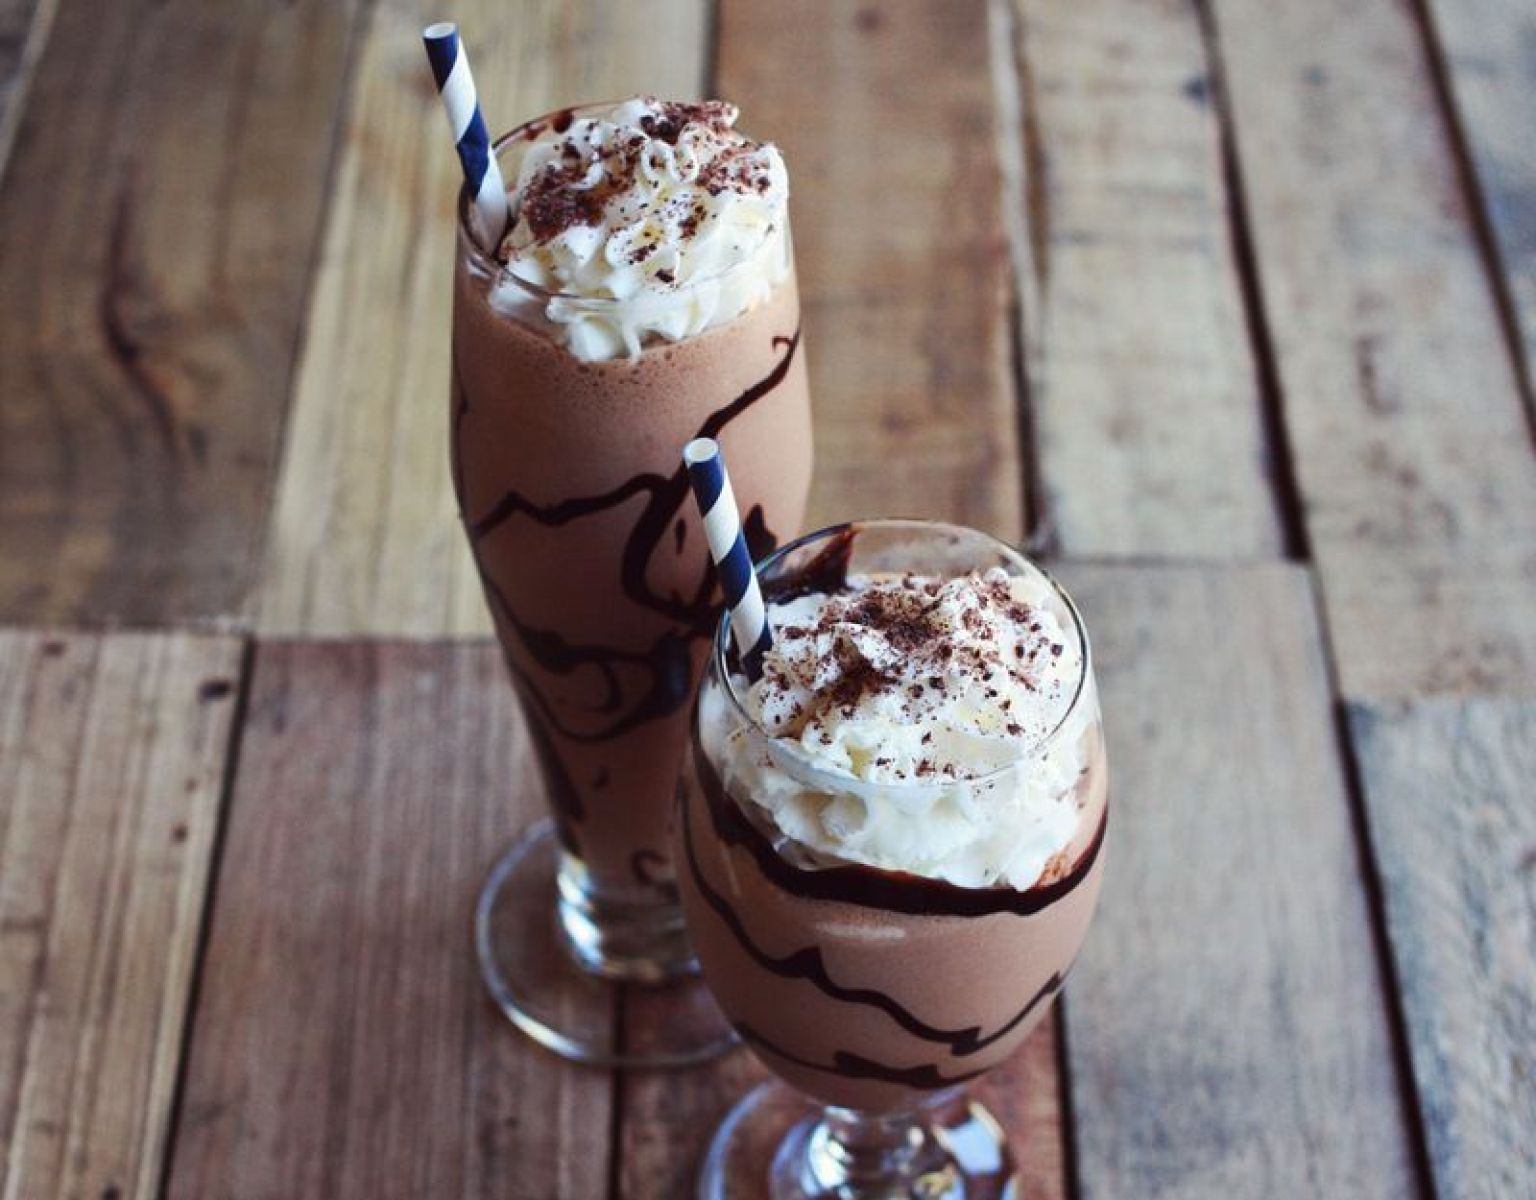 Chocolate Milkshake Recipes For National Chocolate Milkshake Day ...